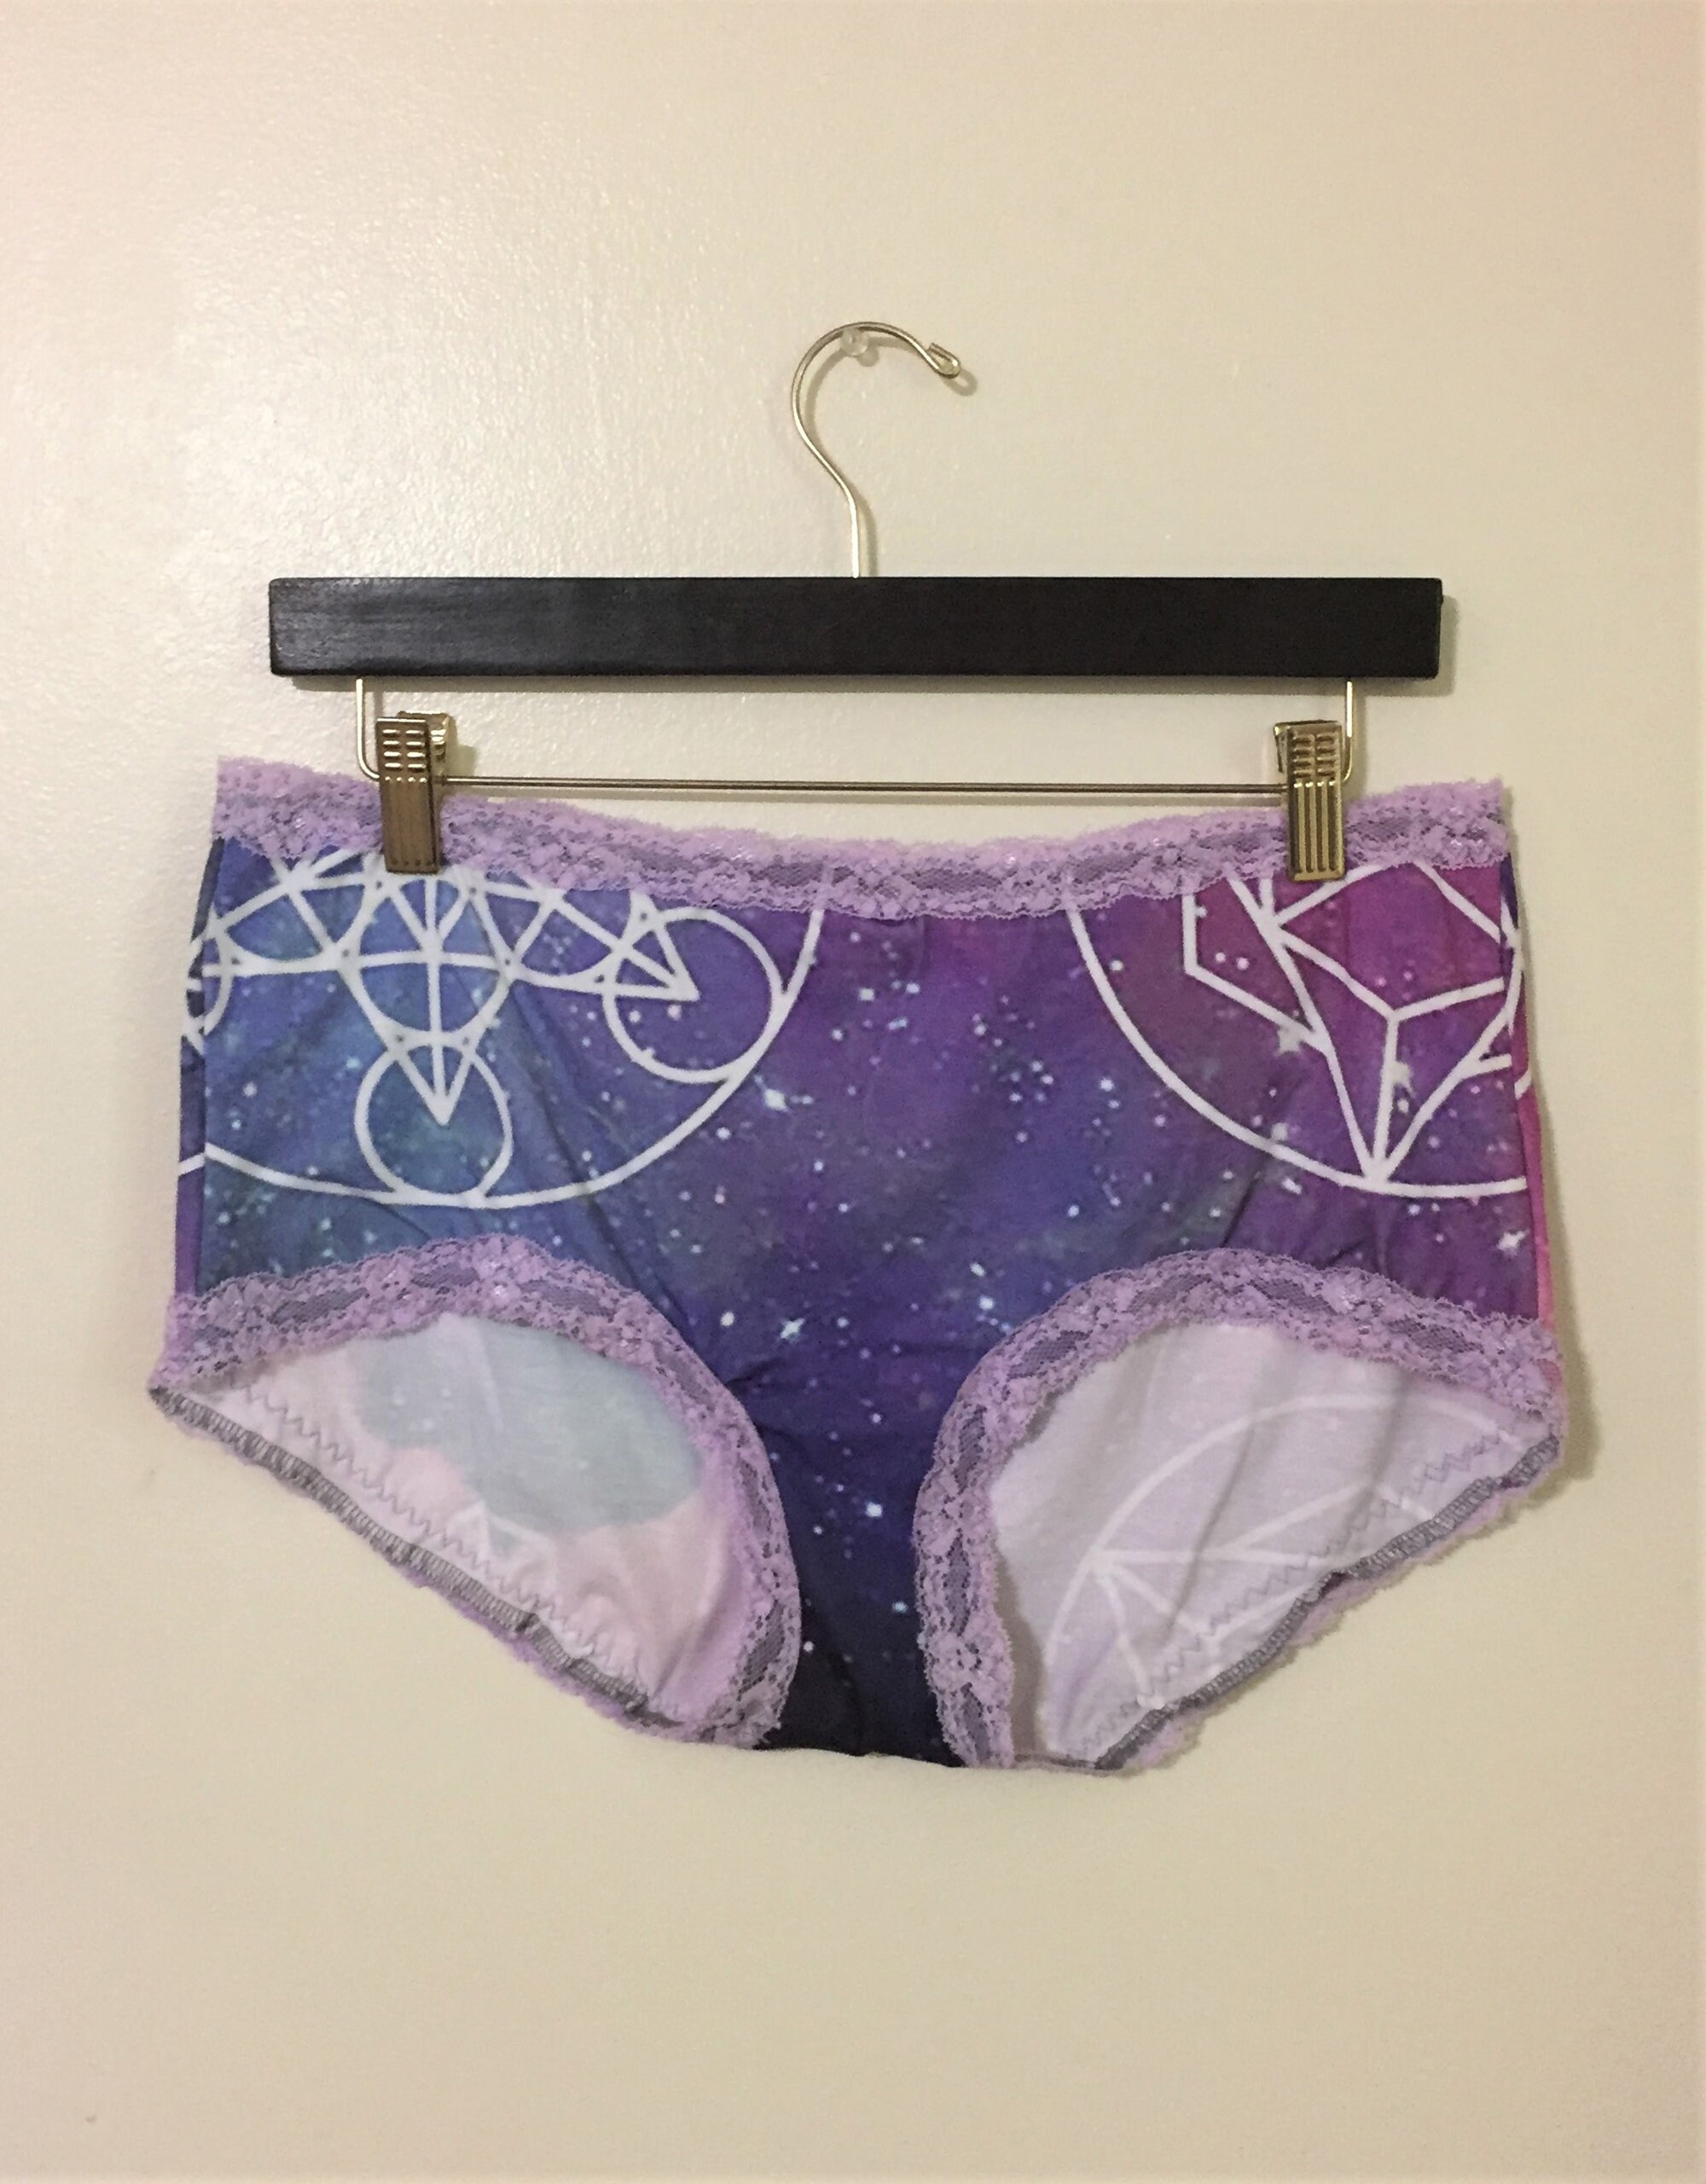 Intergalactic Panties  Sweet clothes, Panties, Galaxy pattern